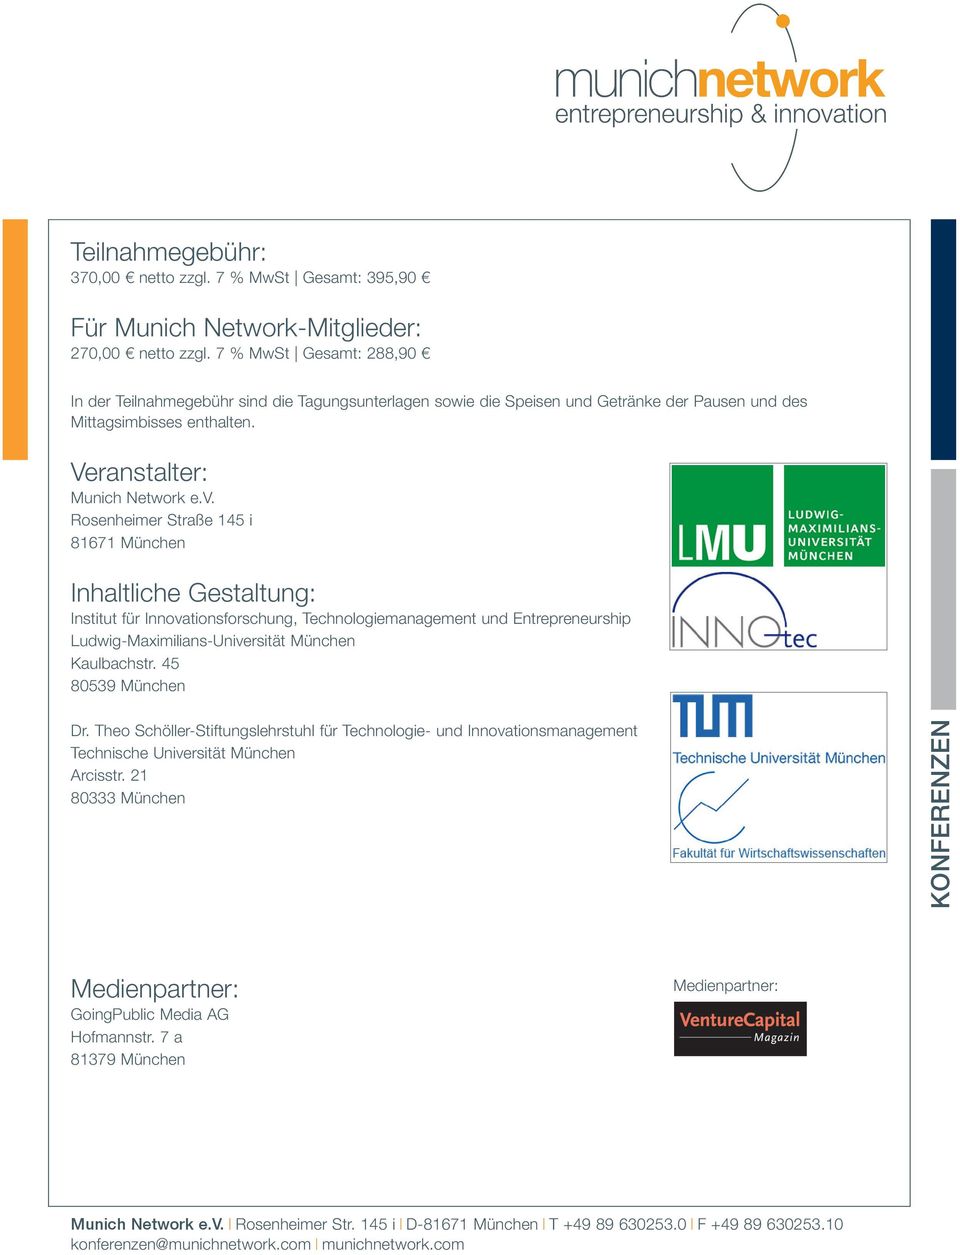 Veranstalter: Munich Network e.v.